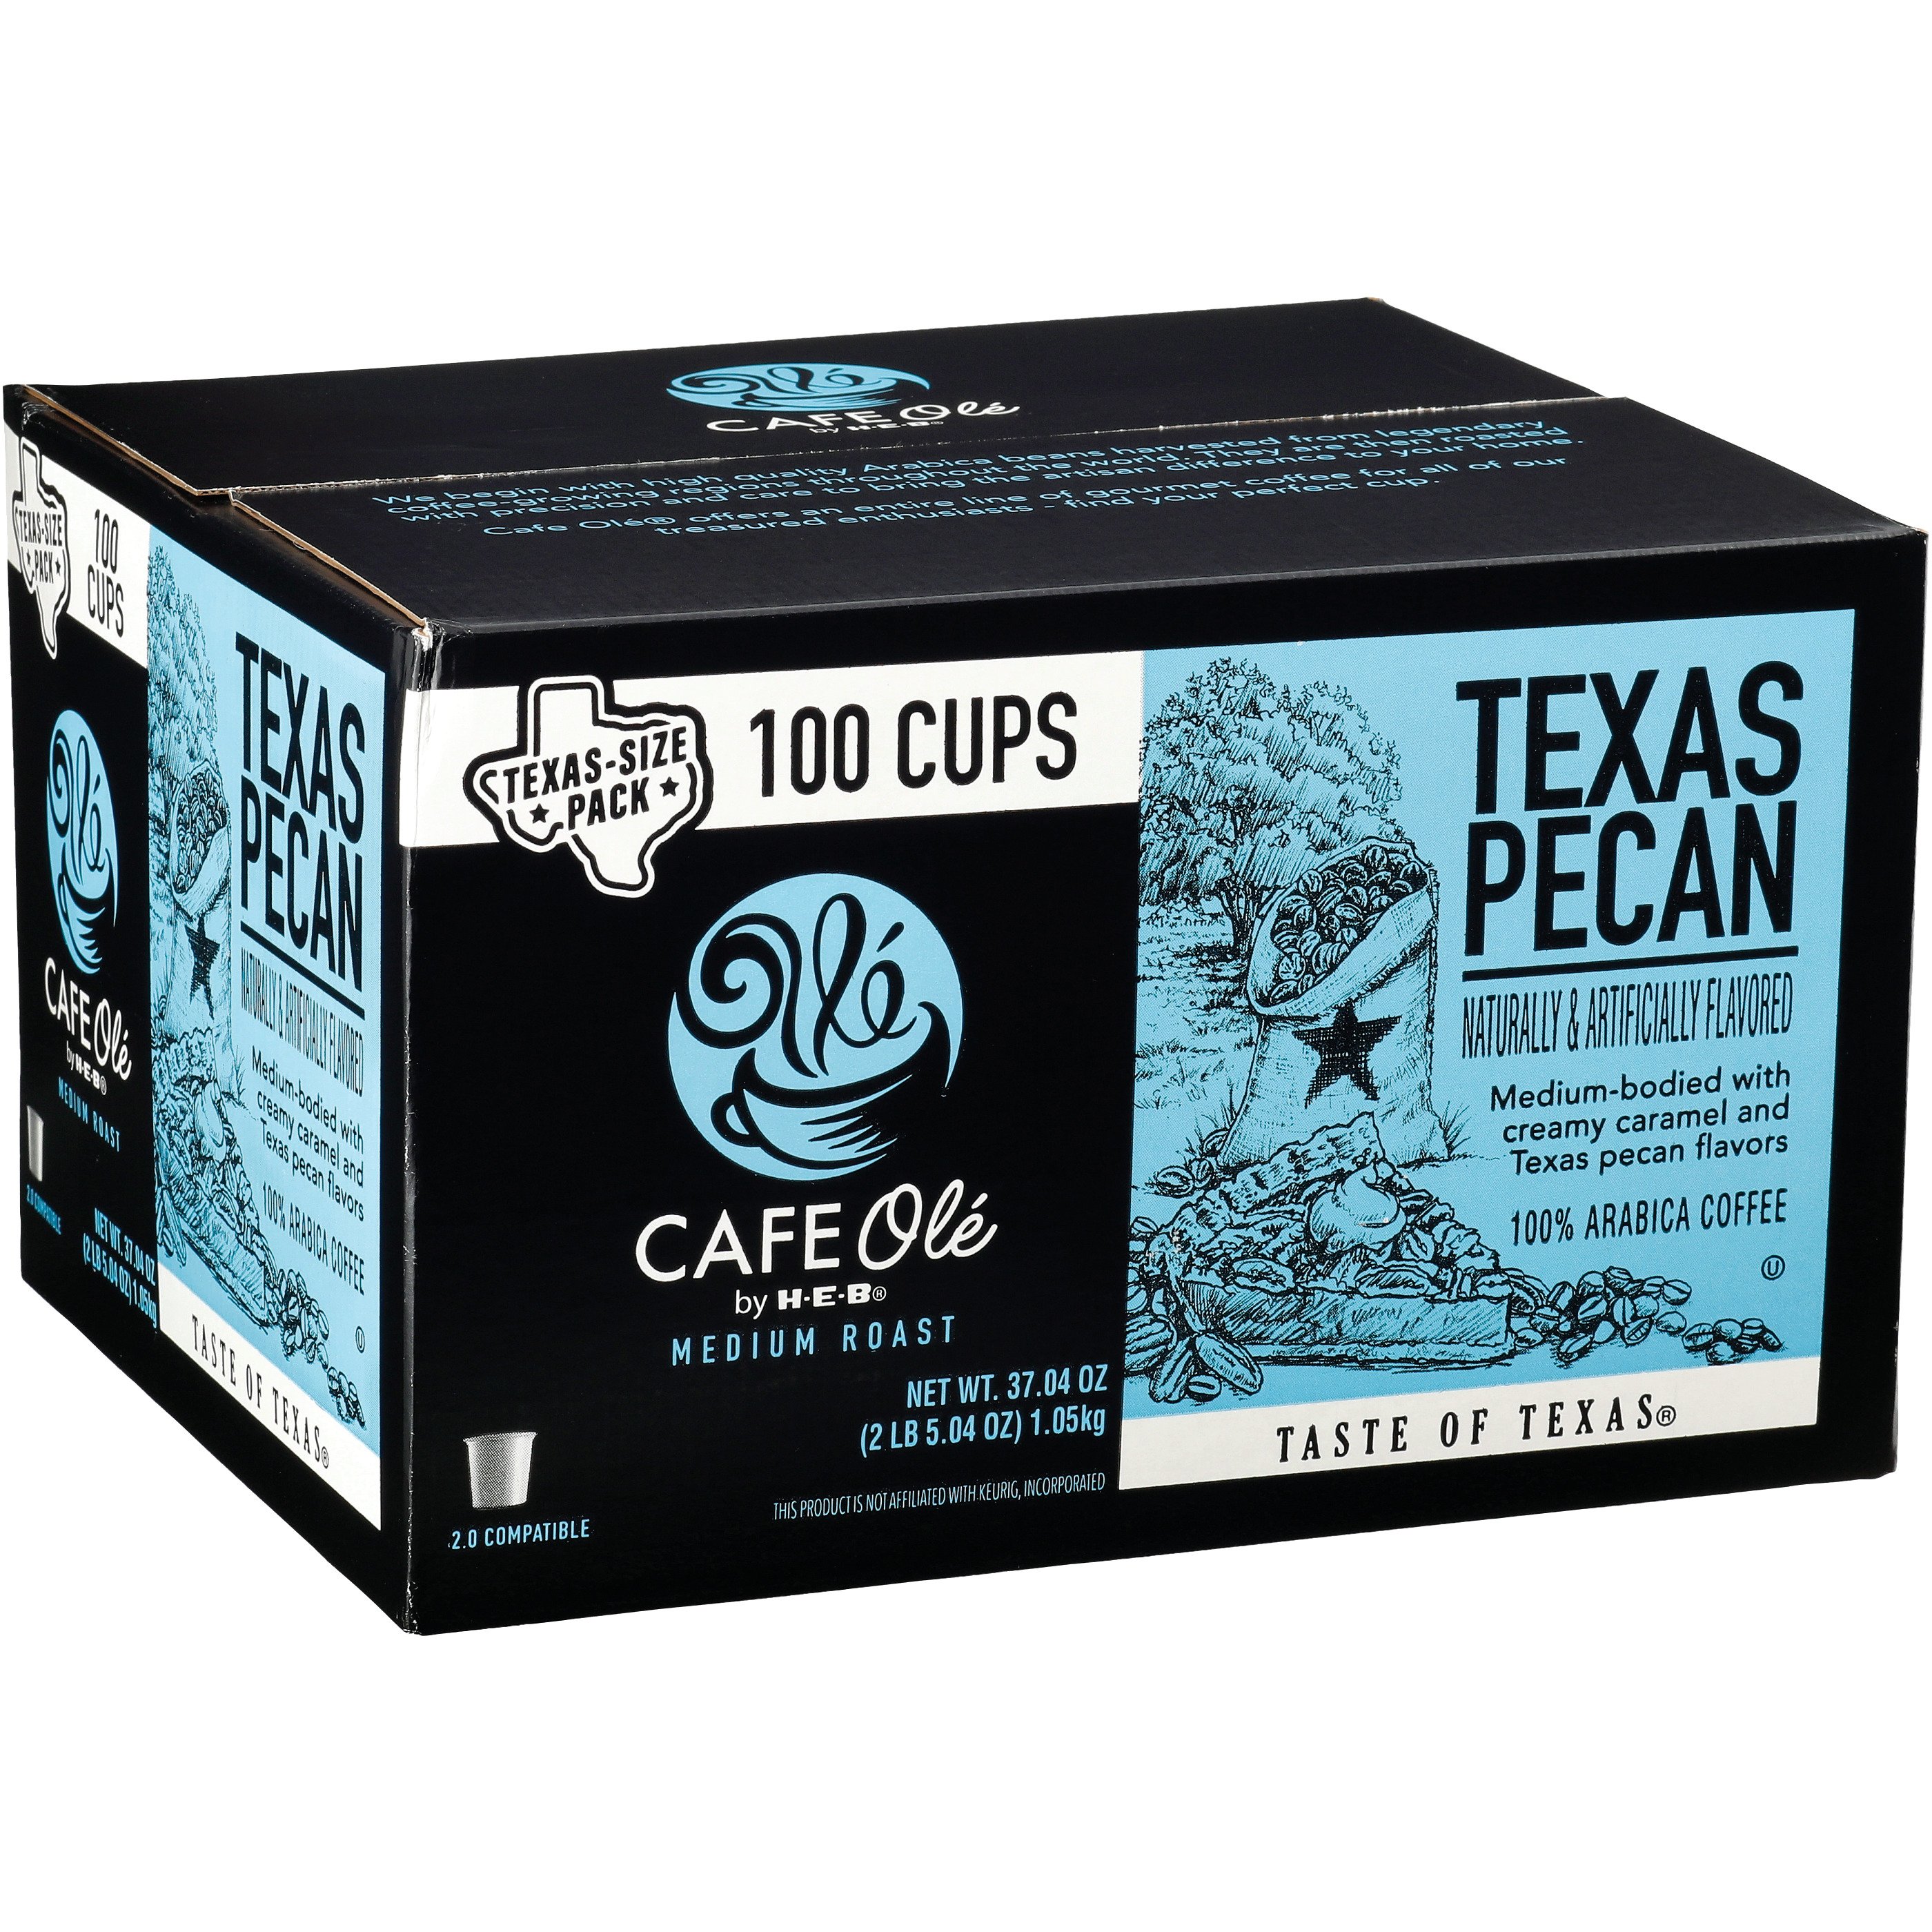 CAFE Olé by H-E-B Medium Roast Texas Pecan Coffee Single Serve Cups - Texas- Size Pack - Shop Coffee at H-E-B